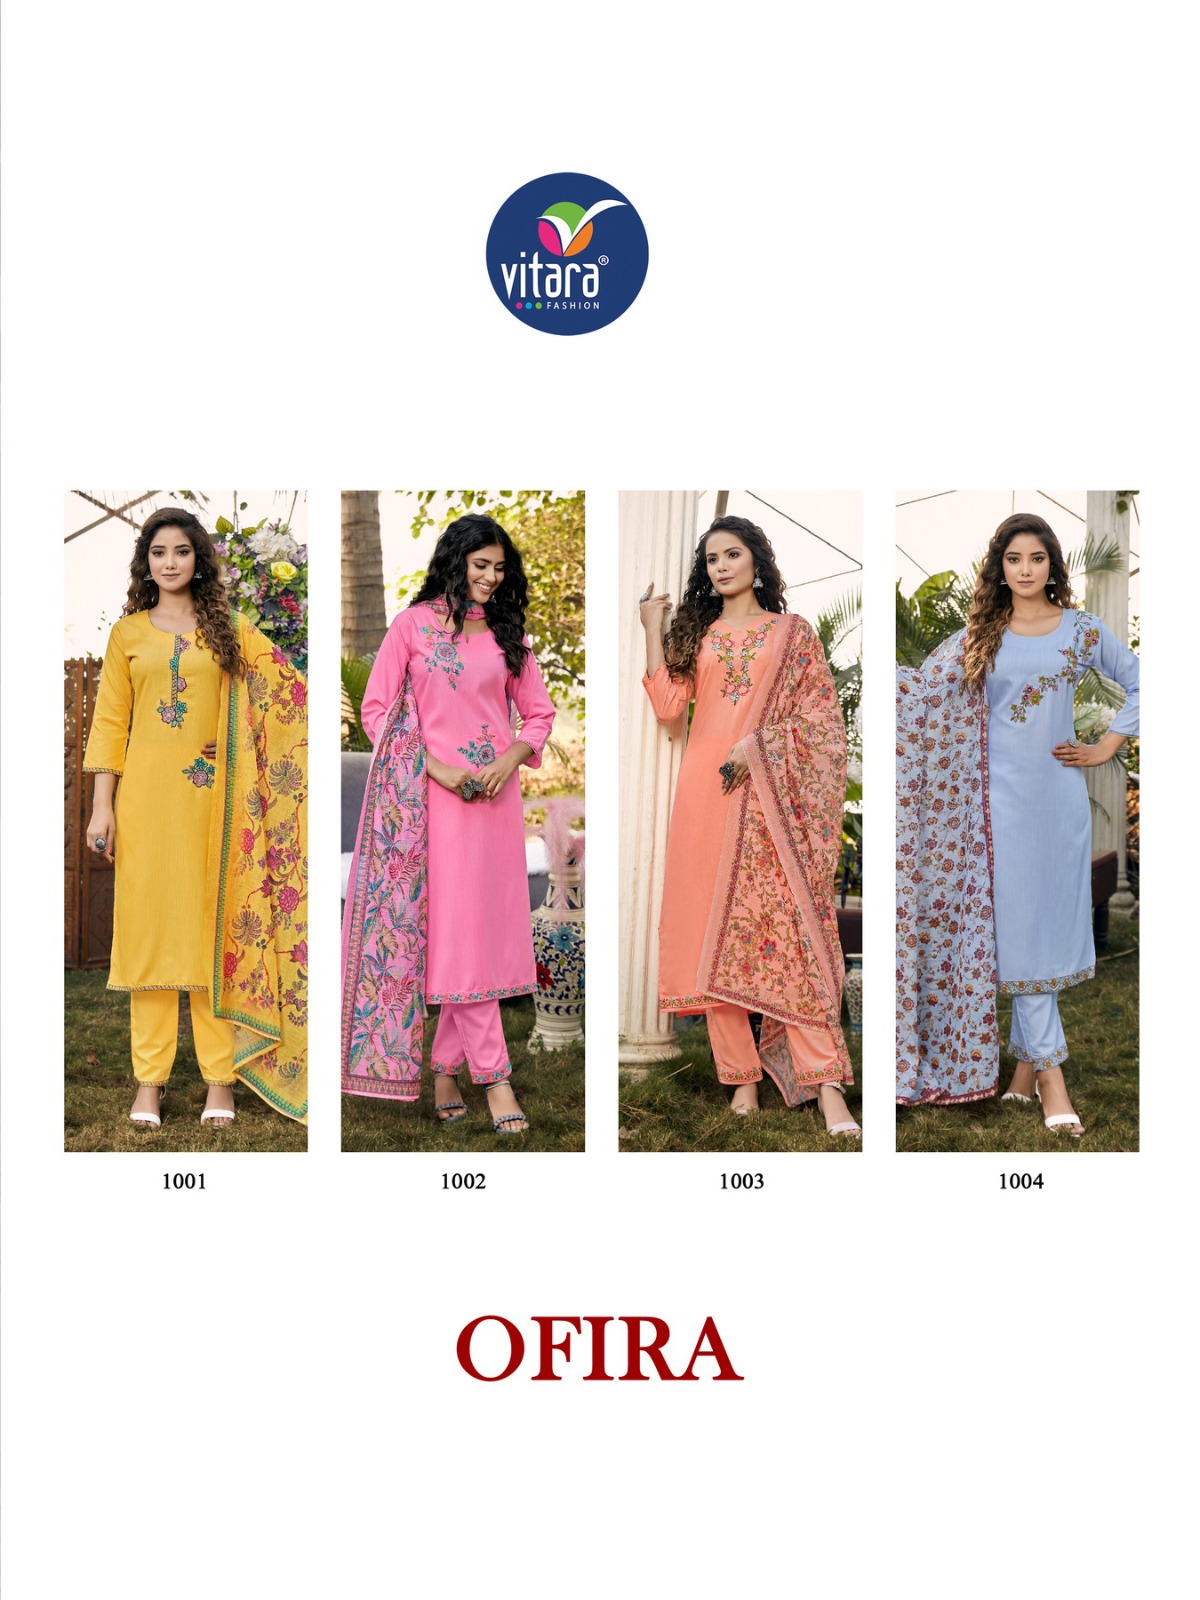 Vitara Ofira collection 3